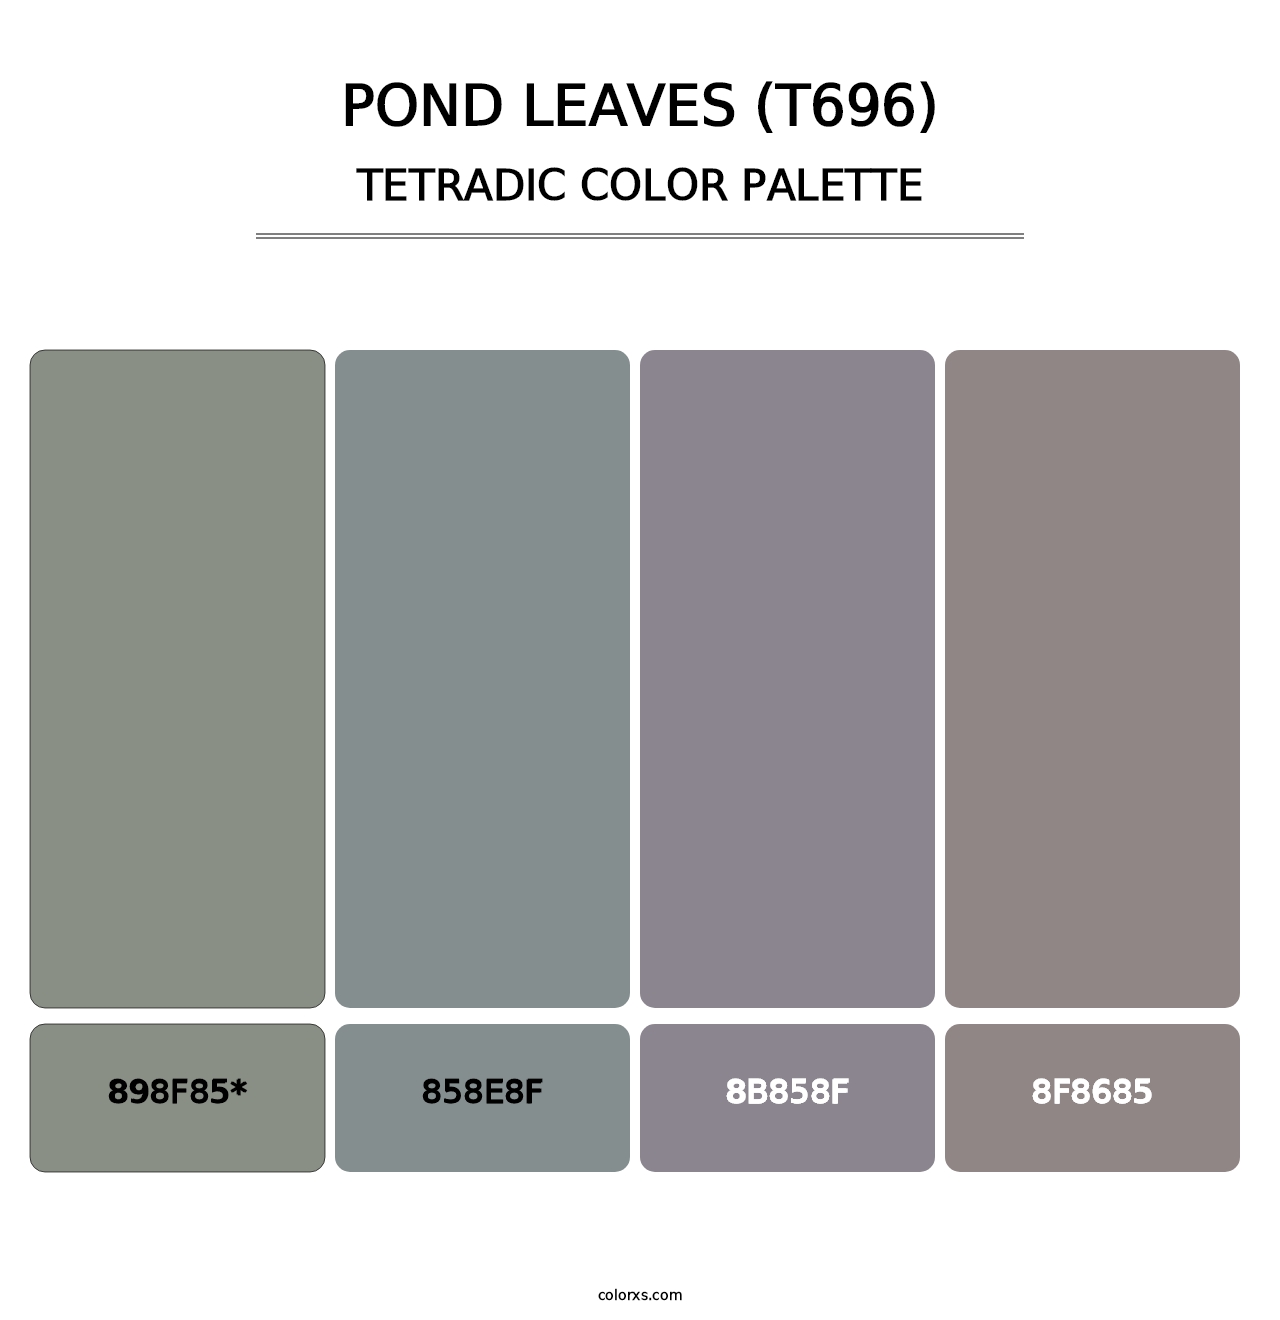 Pond Leaves (T696) - Tetradic Color Palette